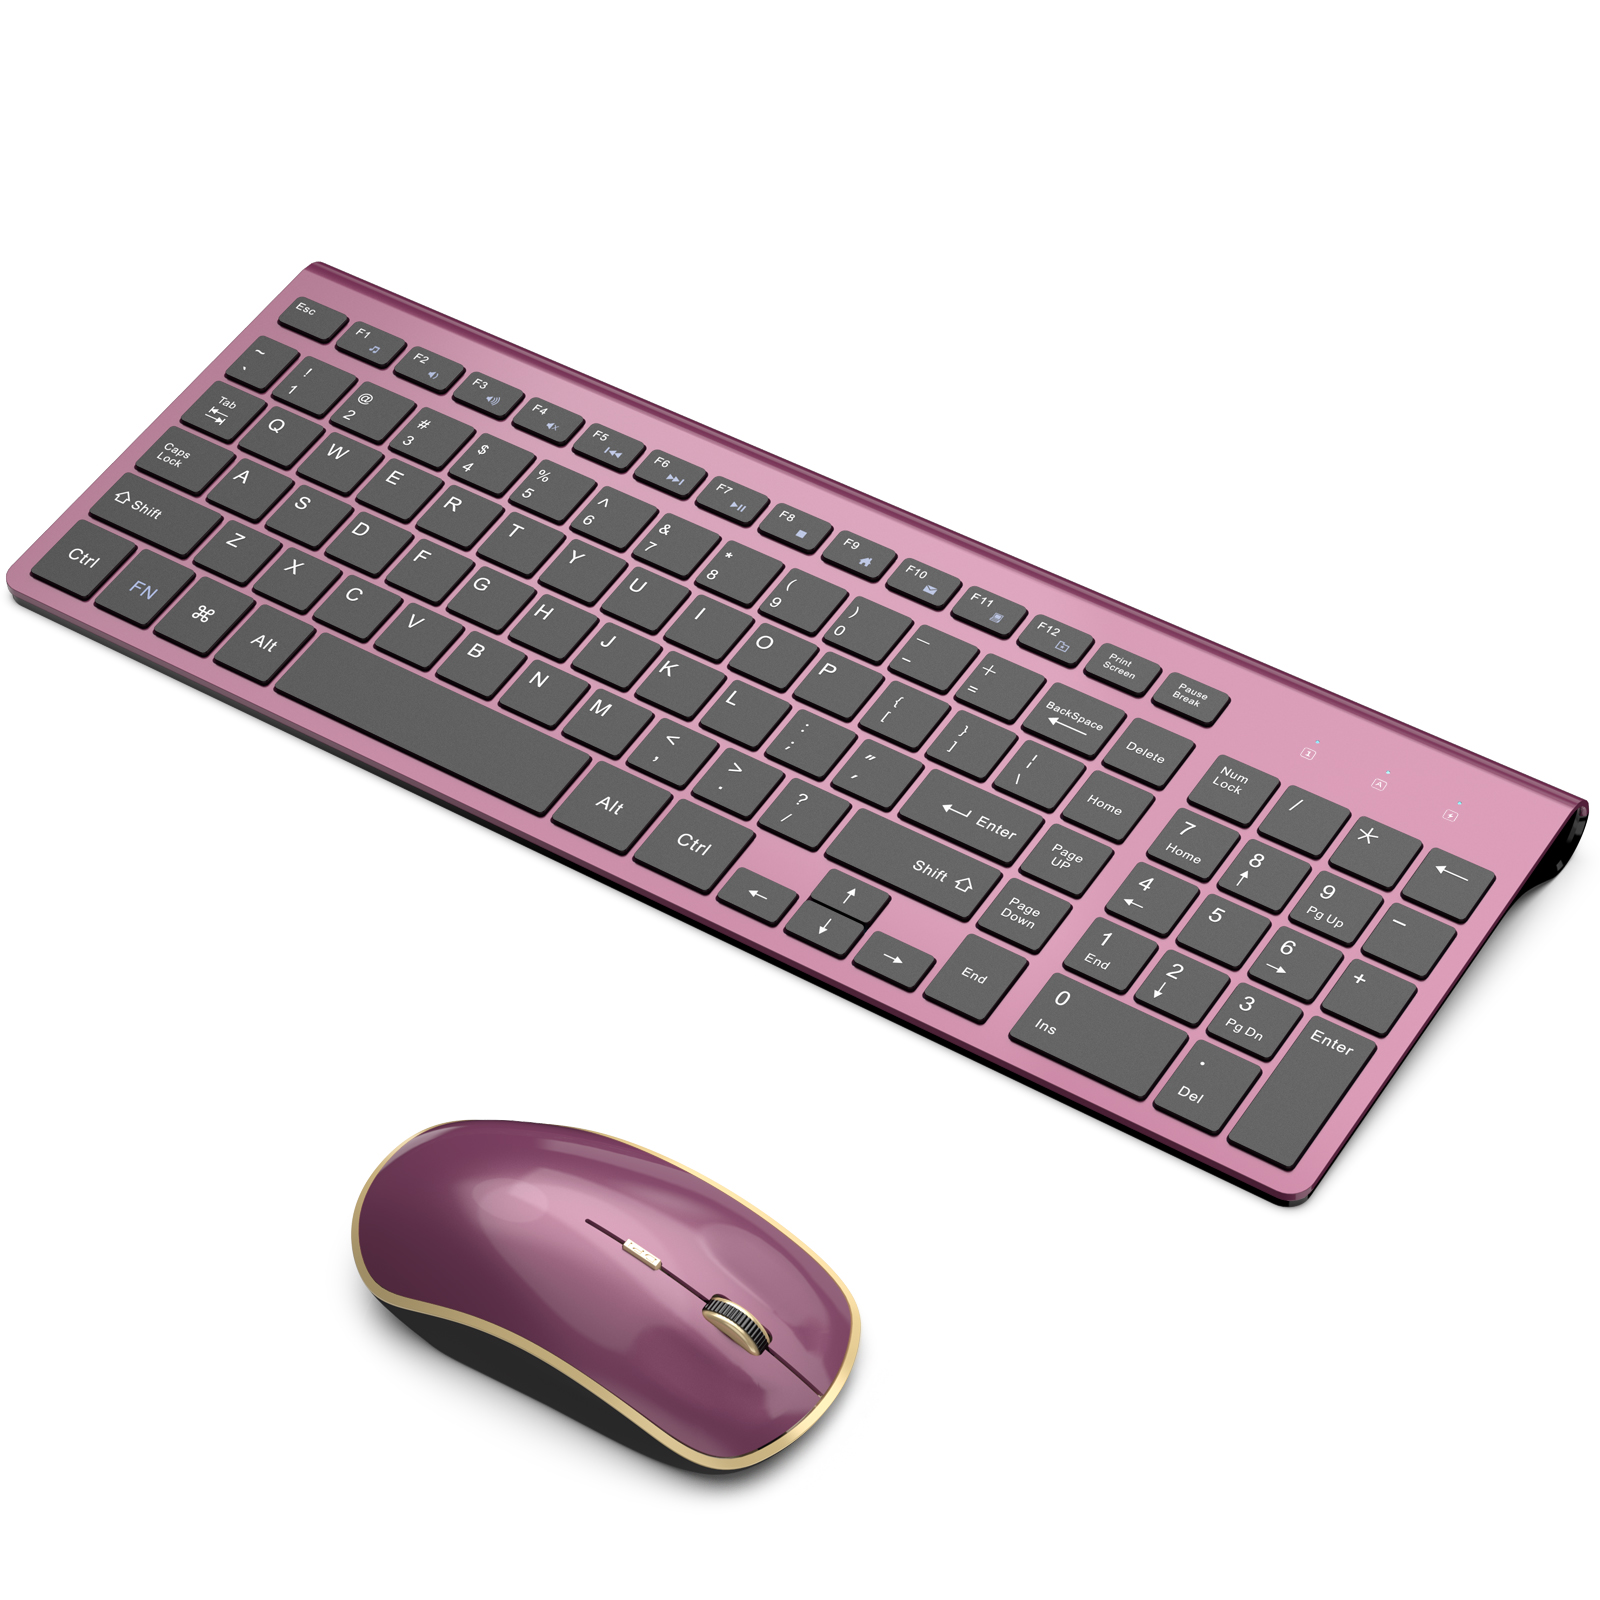 Wireless Keyboard Mouse Combo,J JOYACCESS 2.4G Compact and Ultra Slim Wireless Keyboard and Mouse for Windows, Computer, Desktop, PC, Laptop (Wine red)